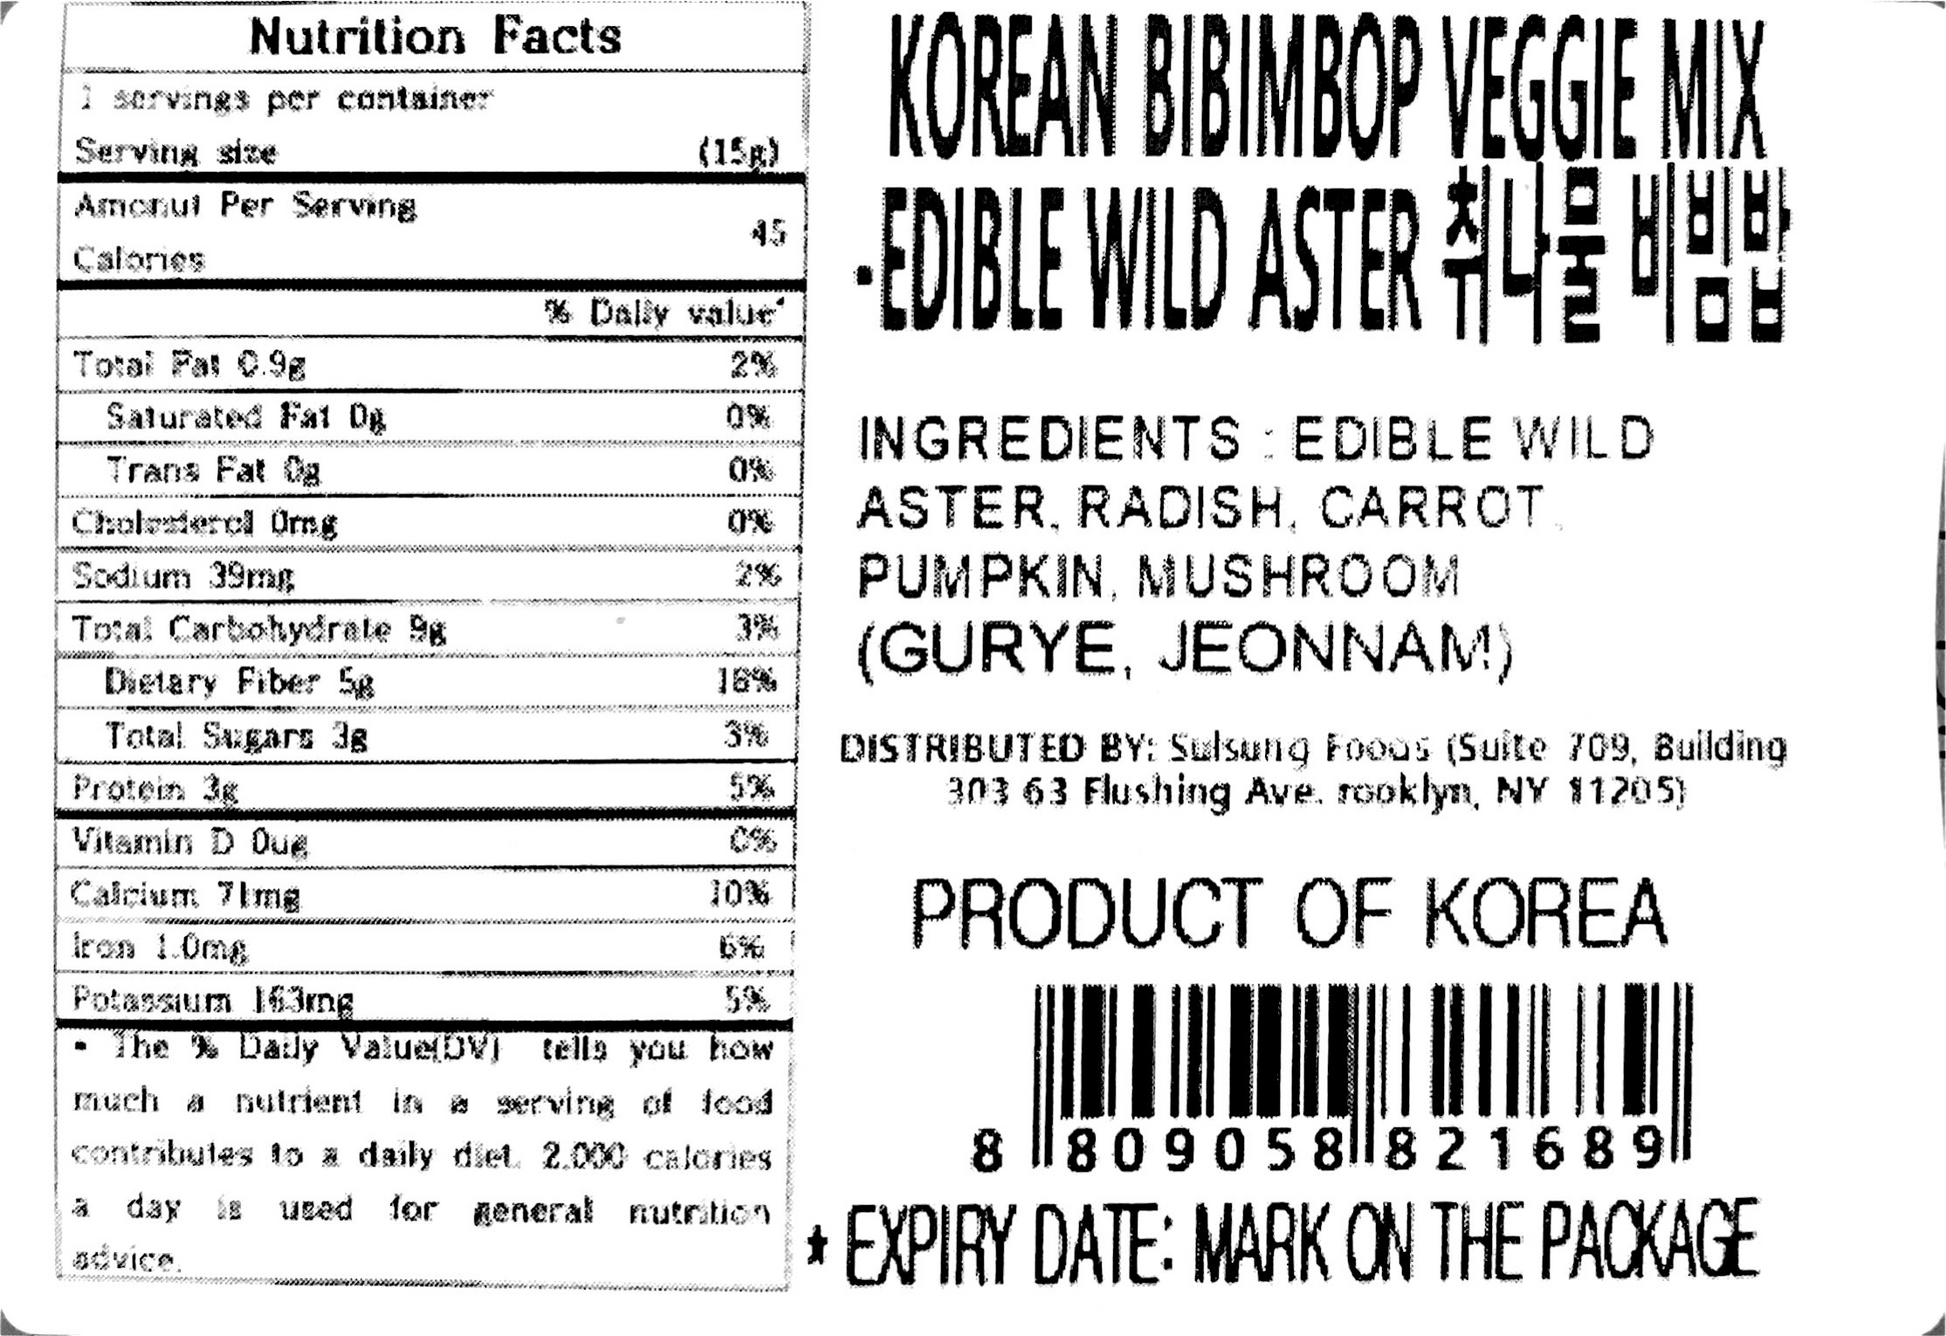 Wild Vegetable Bibimbap Kit x 2 Packs - Kim'C Market